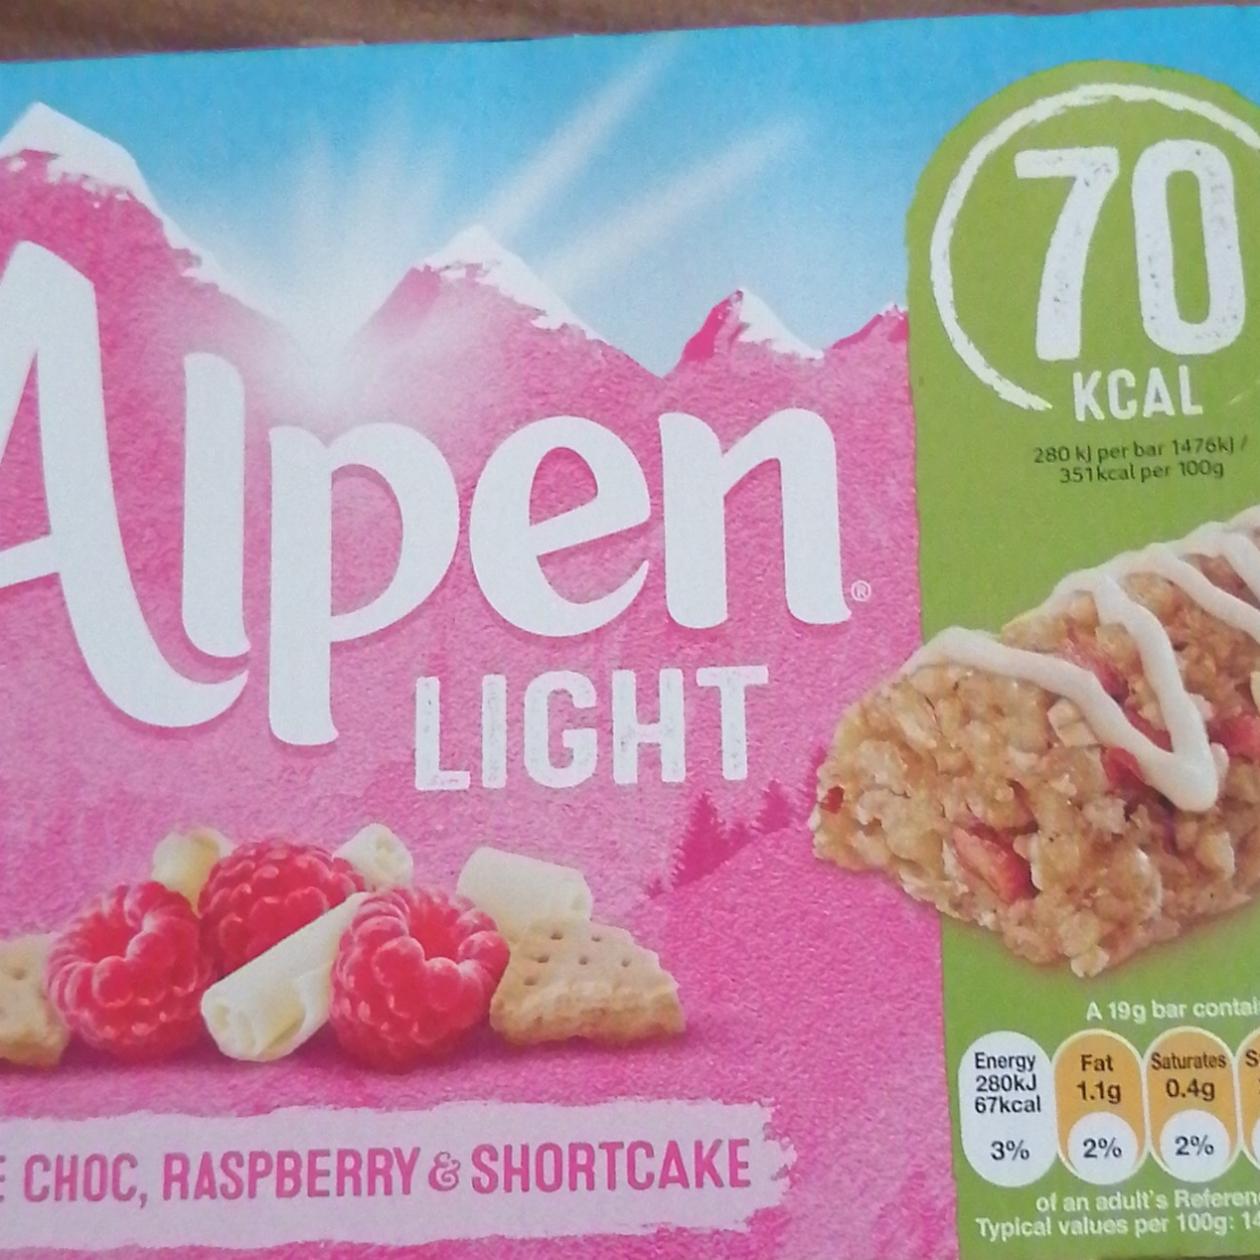 Fotografie - Alpen light white choc, raspberry shortcake